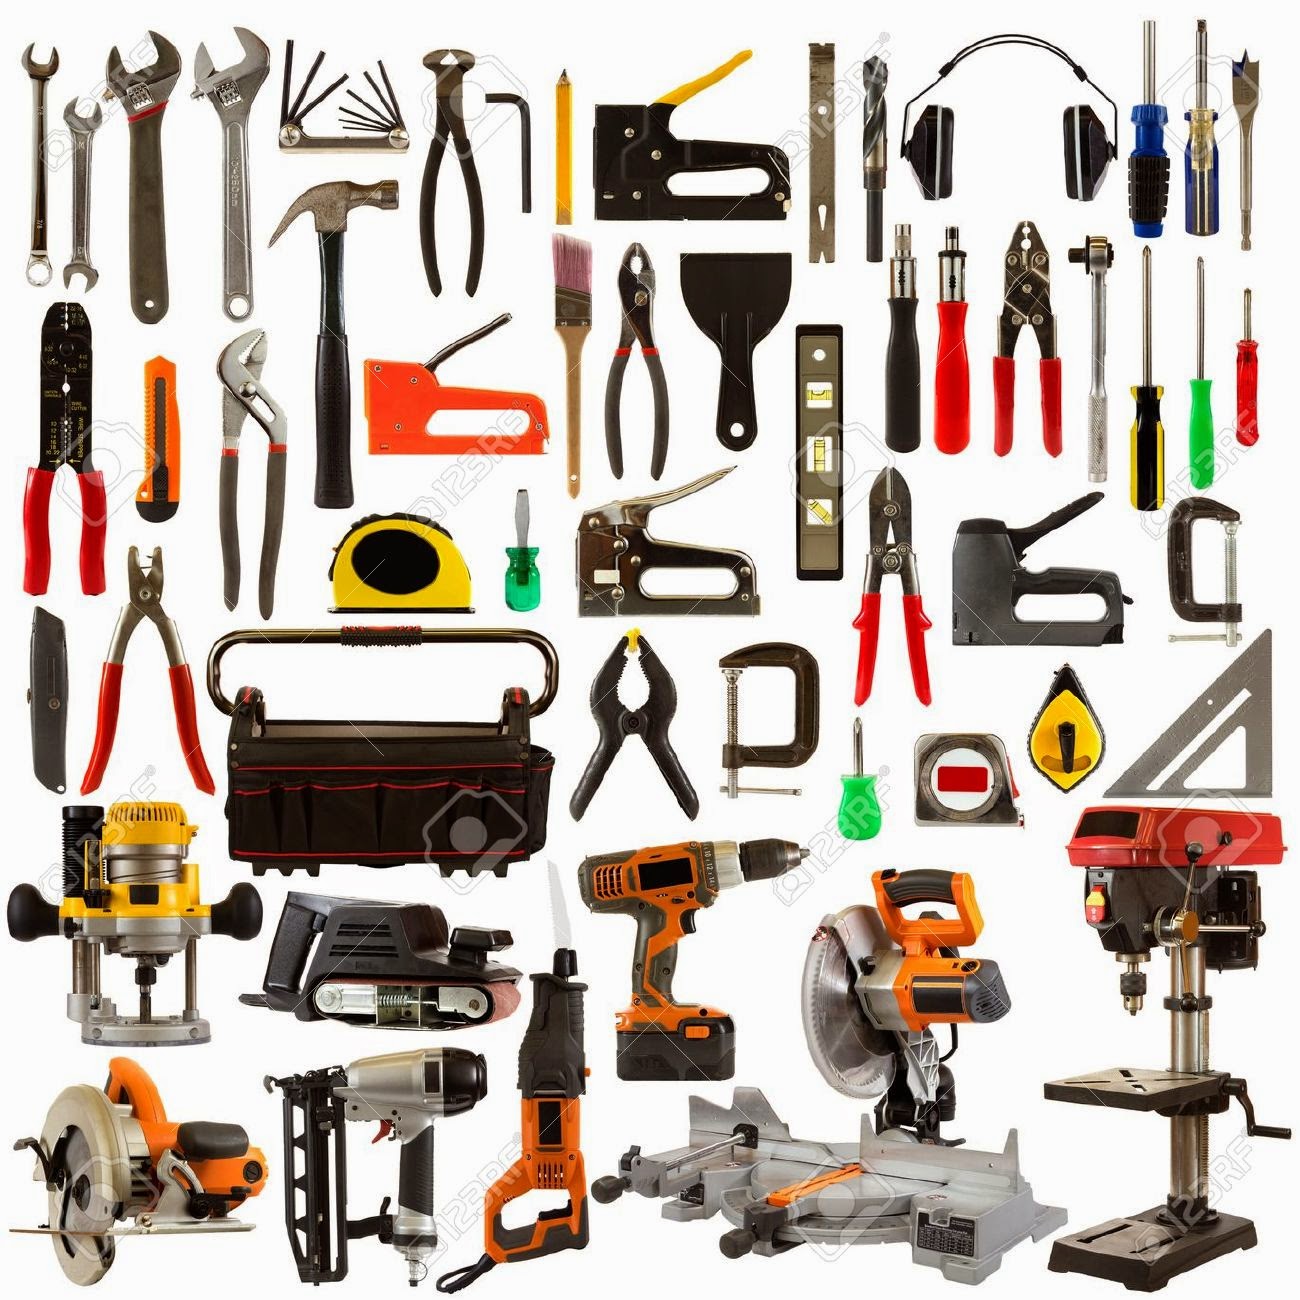 herramientas de carpinteria electricas